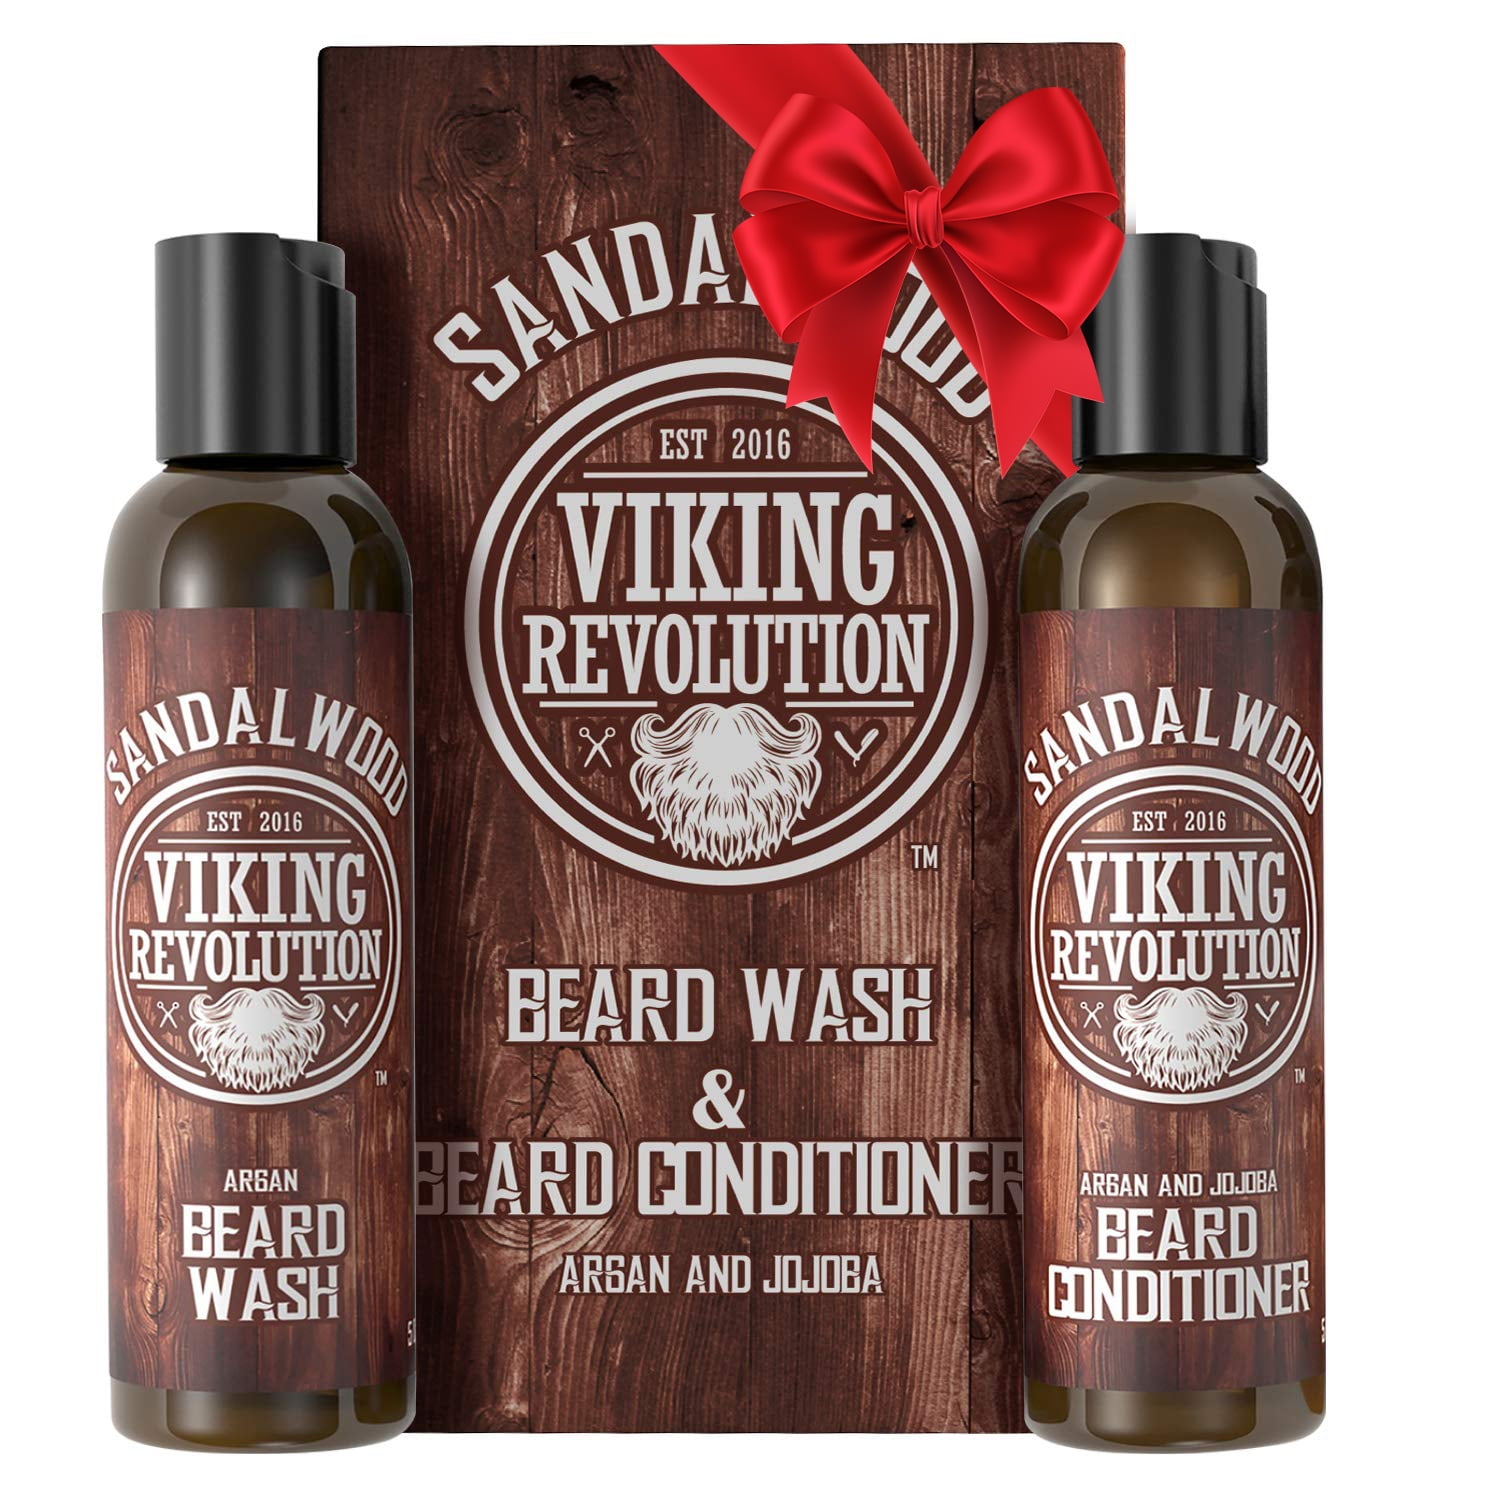 Viking Revolution Beard Wash & Beard Conditioner Set 2x 17Oz With Argan & Jojoba Oils - Softens& Strengthens - Natural Peppermint And Eucalyptus